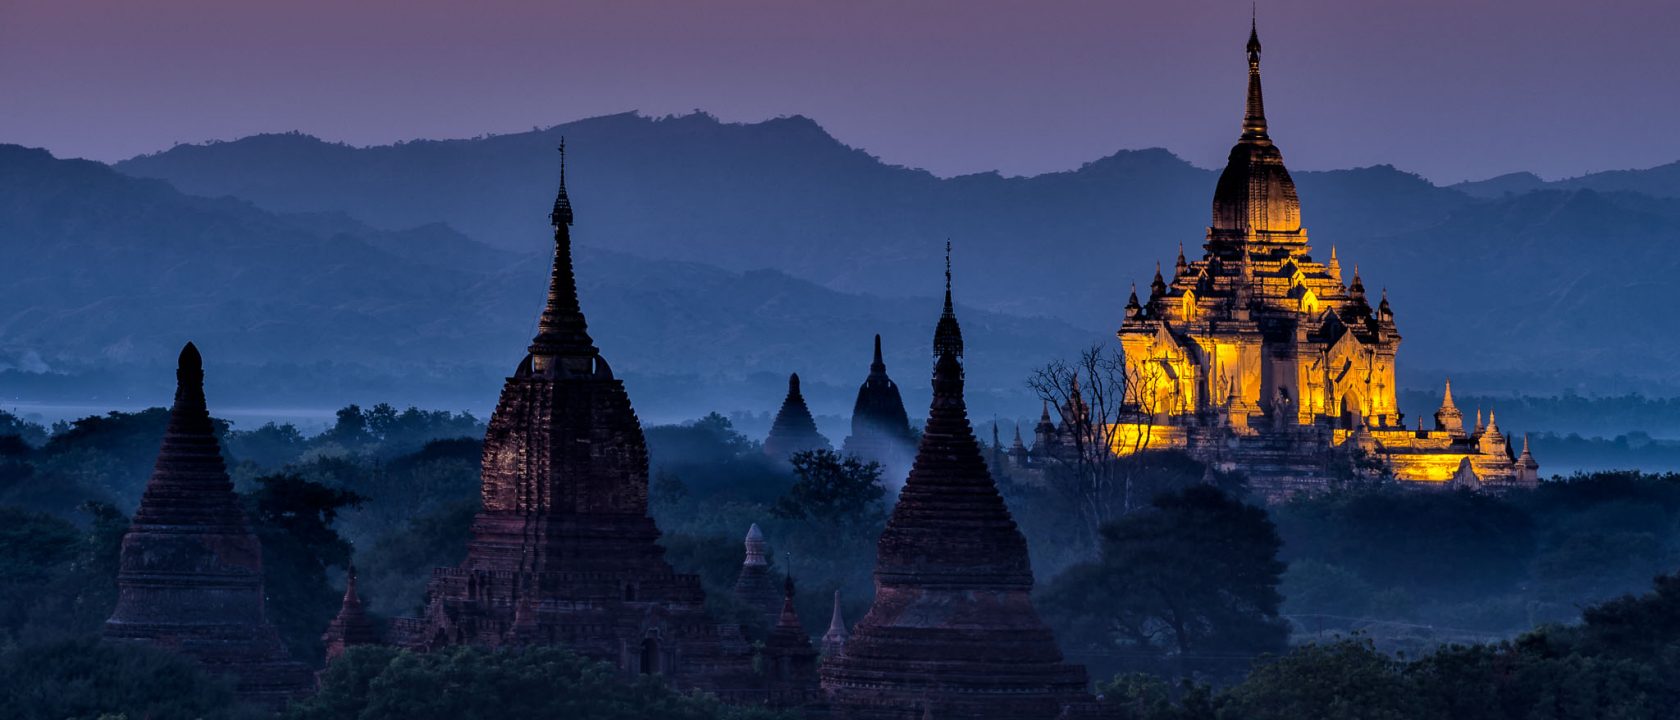 Fotoreise nach Myanmar - Tempel bei Sonnenuntergang in Bagan